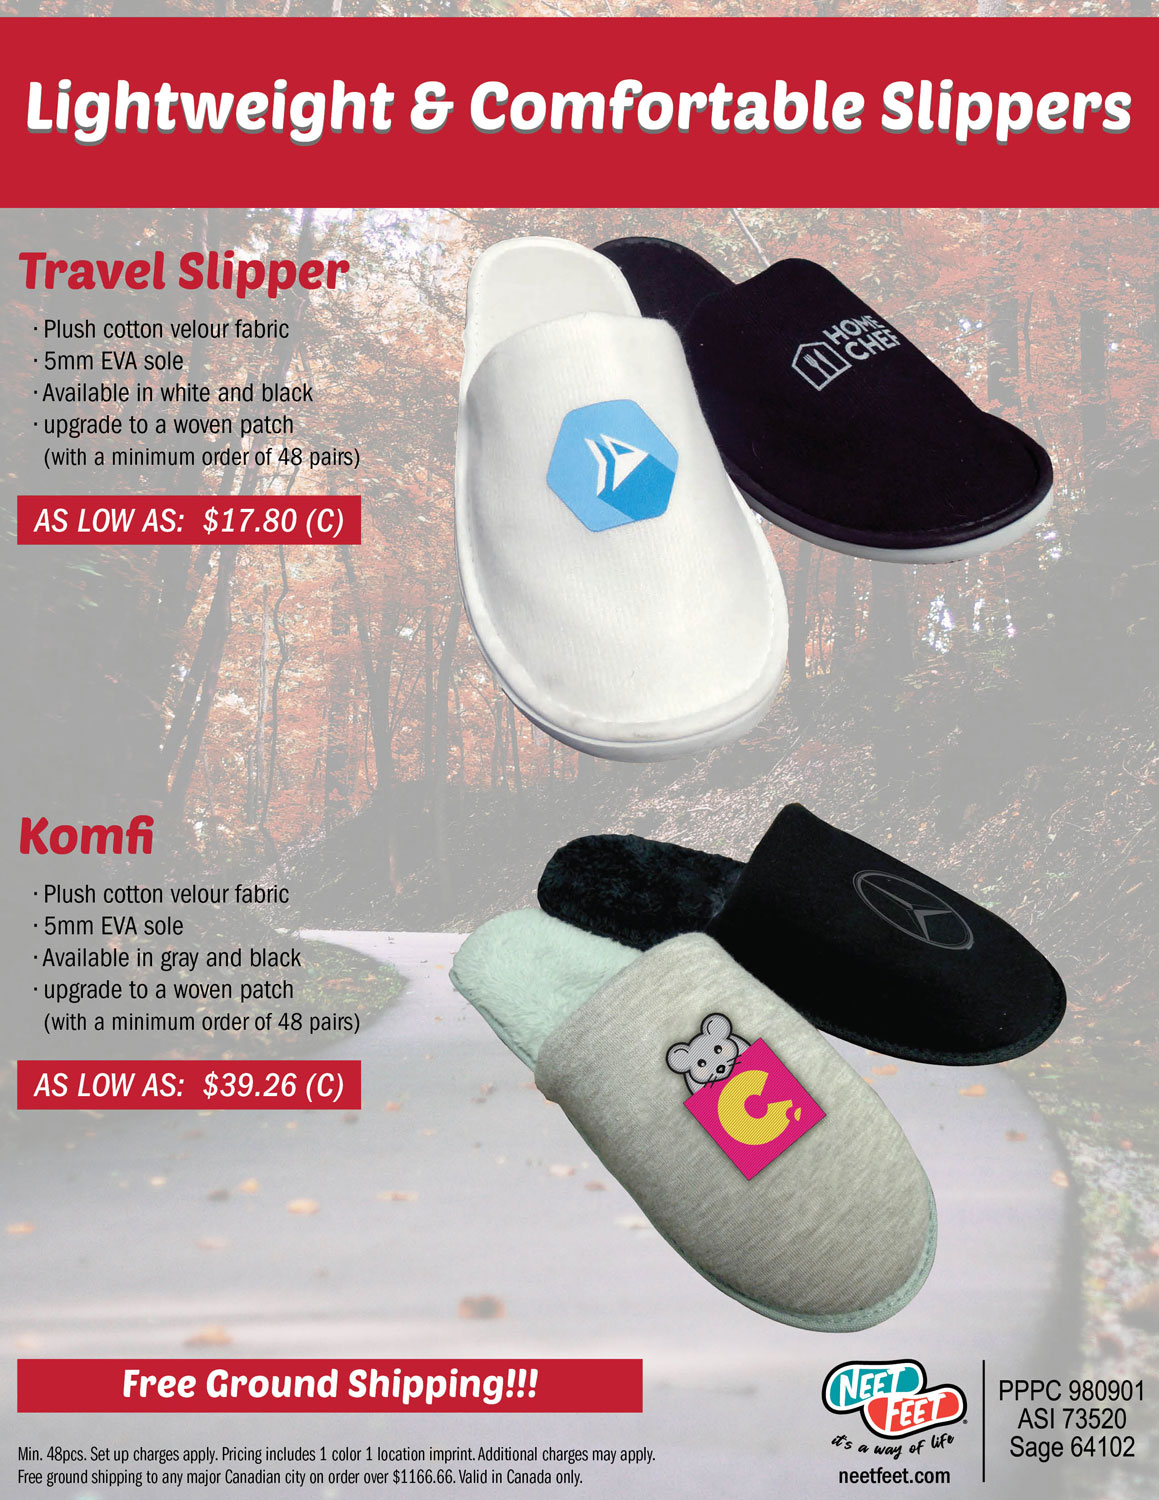 Lightweight & Comfortable Slippers